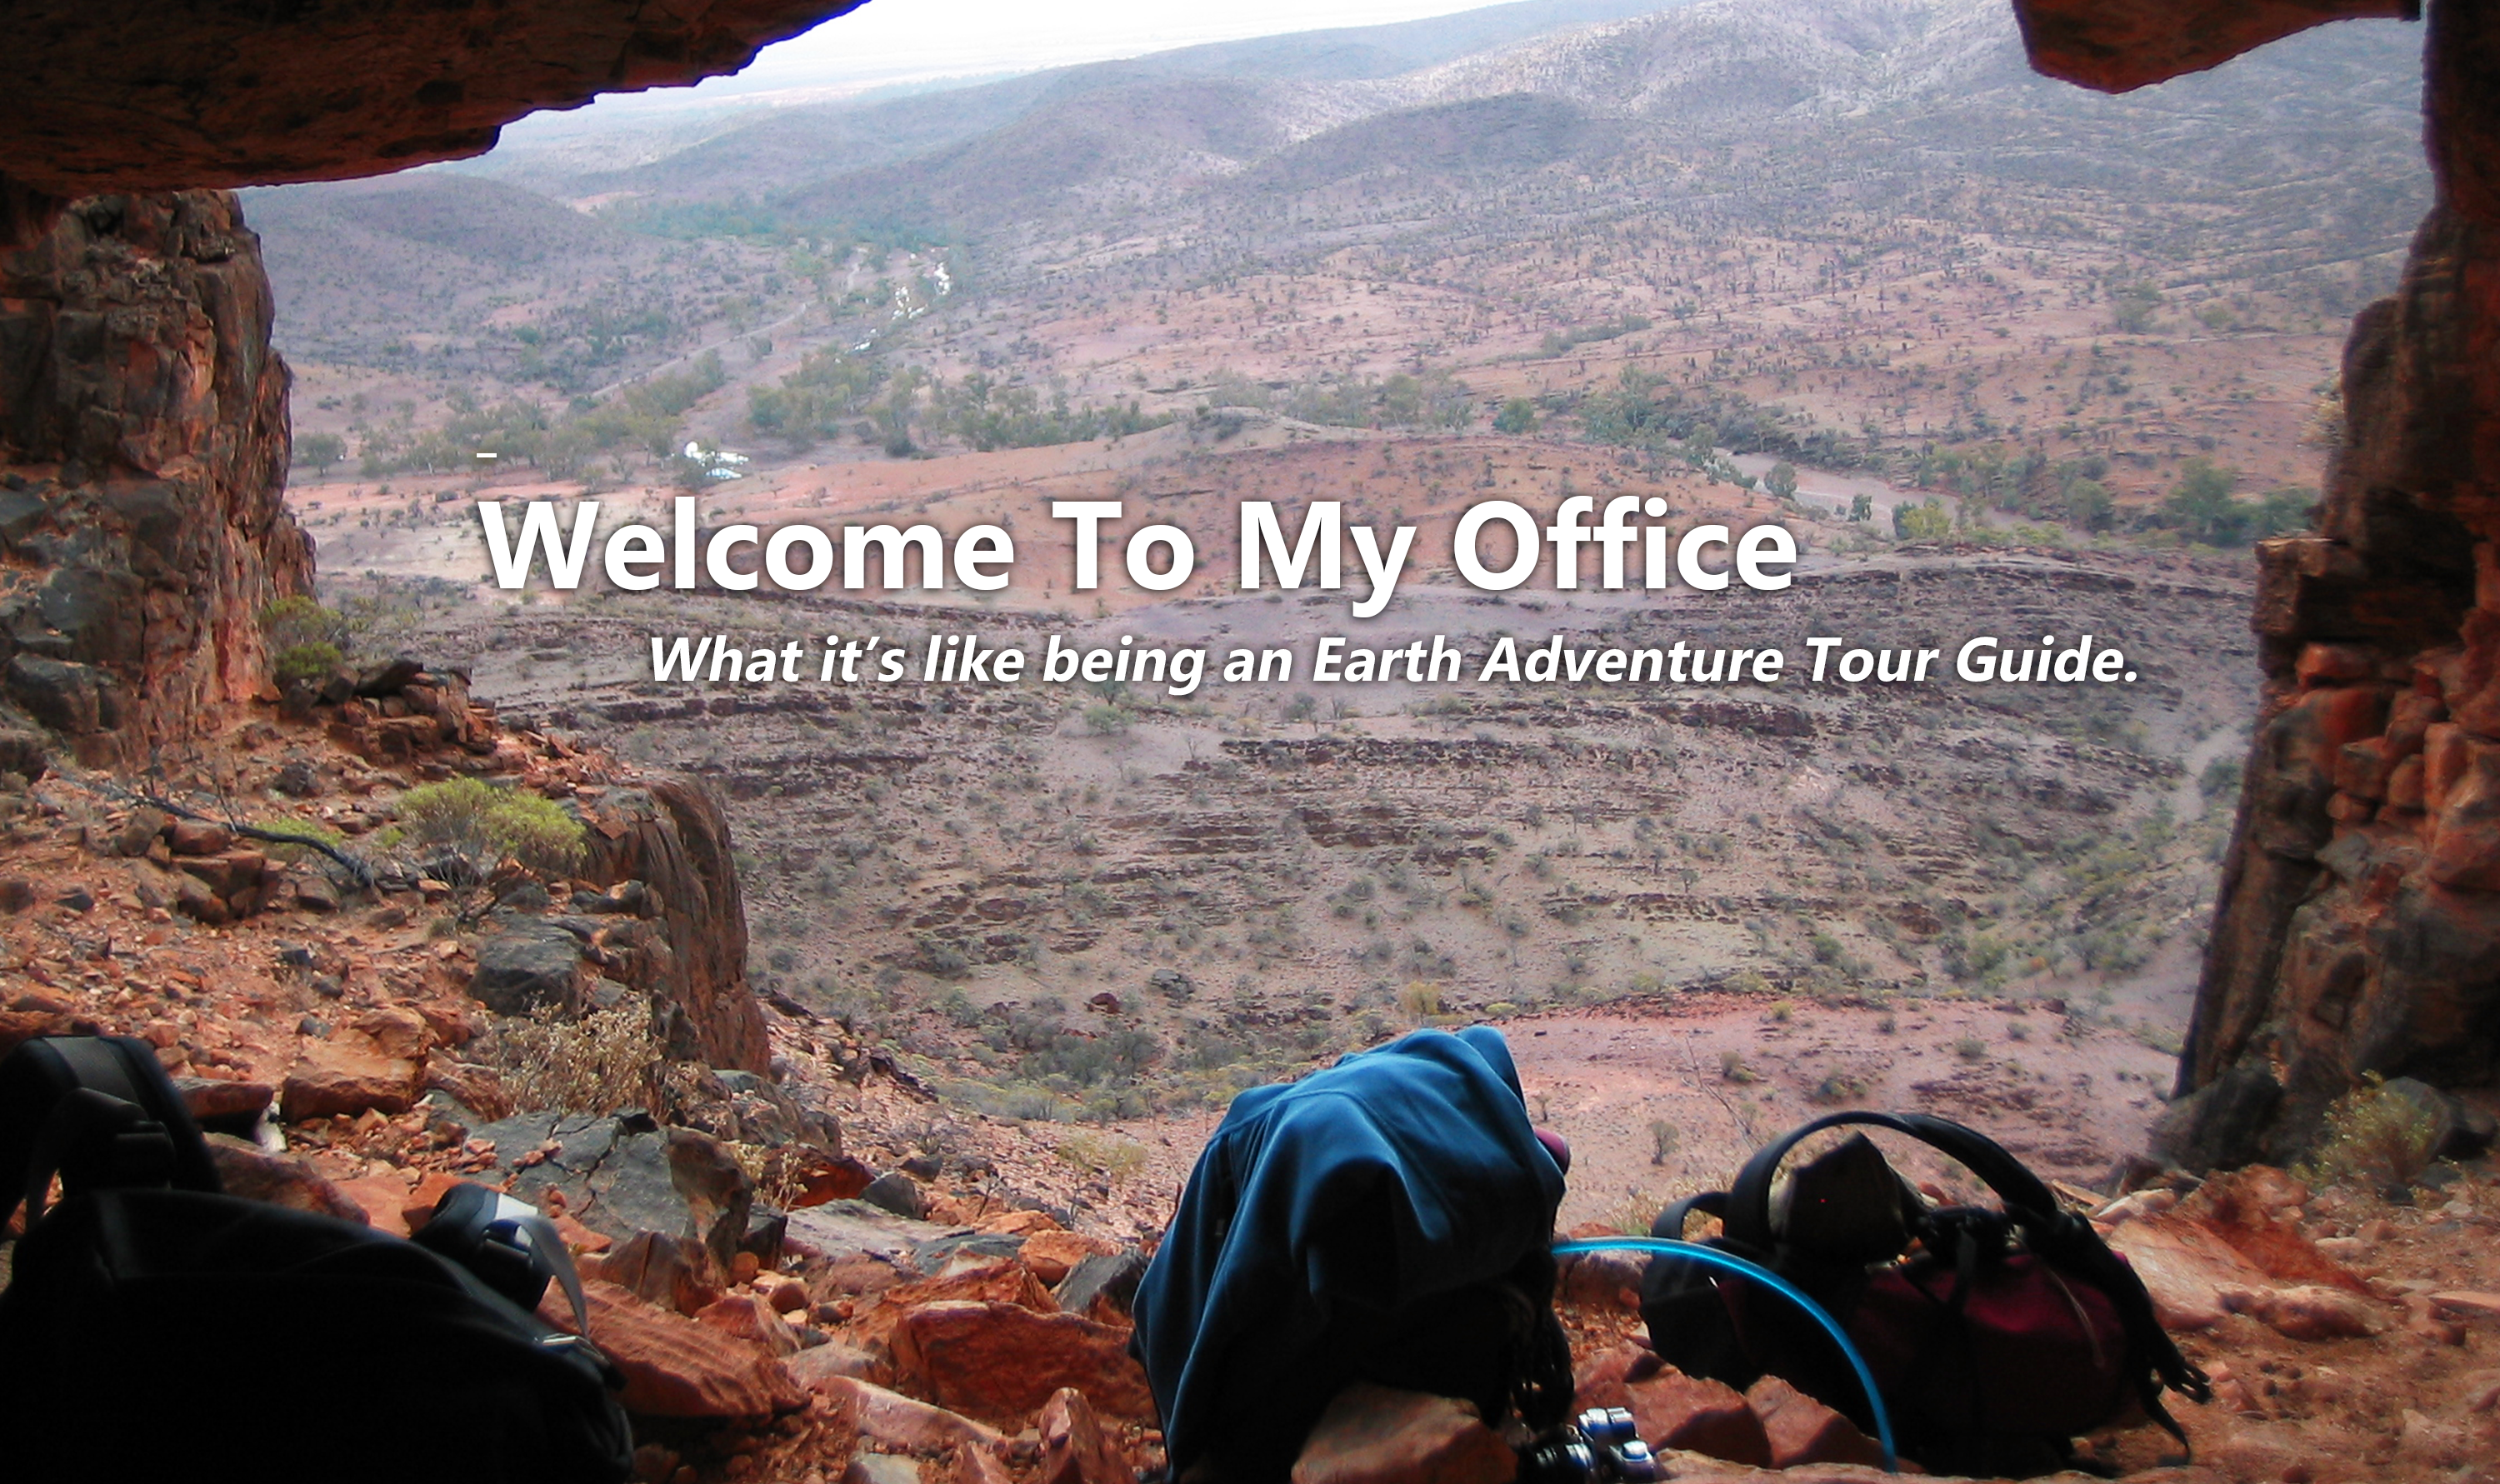 Earth Adventure Tour Guide